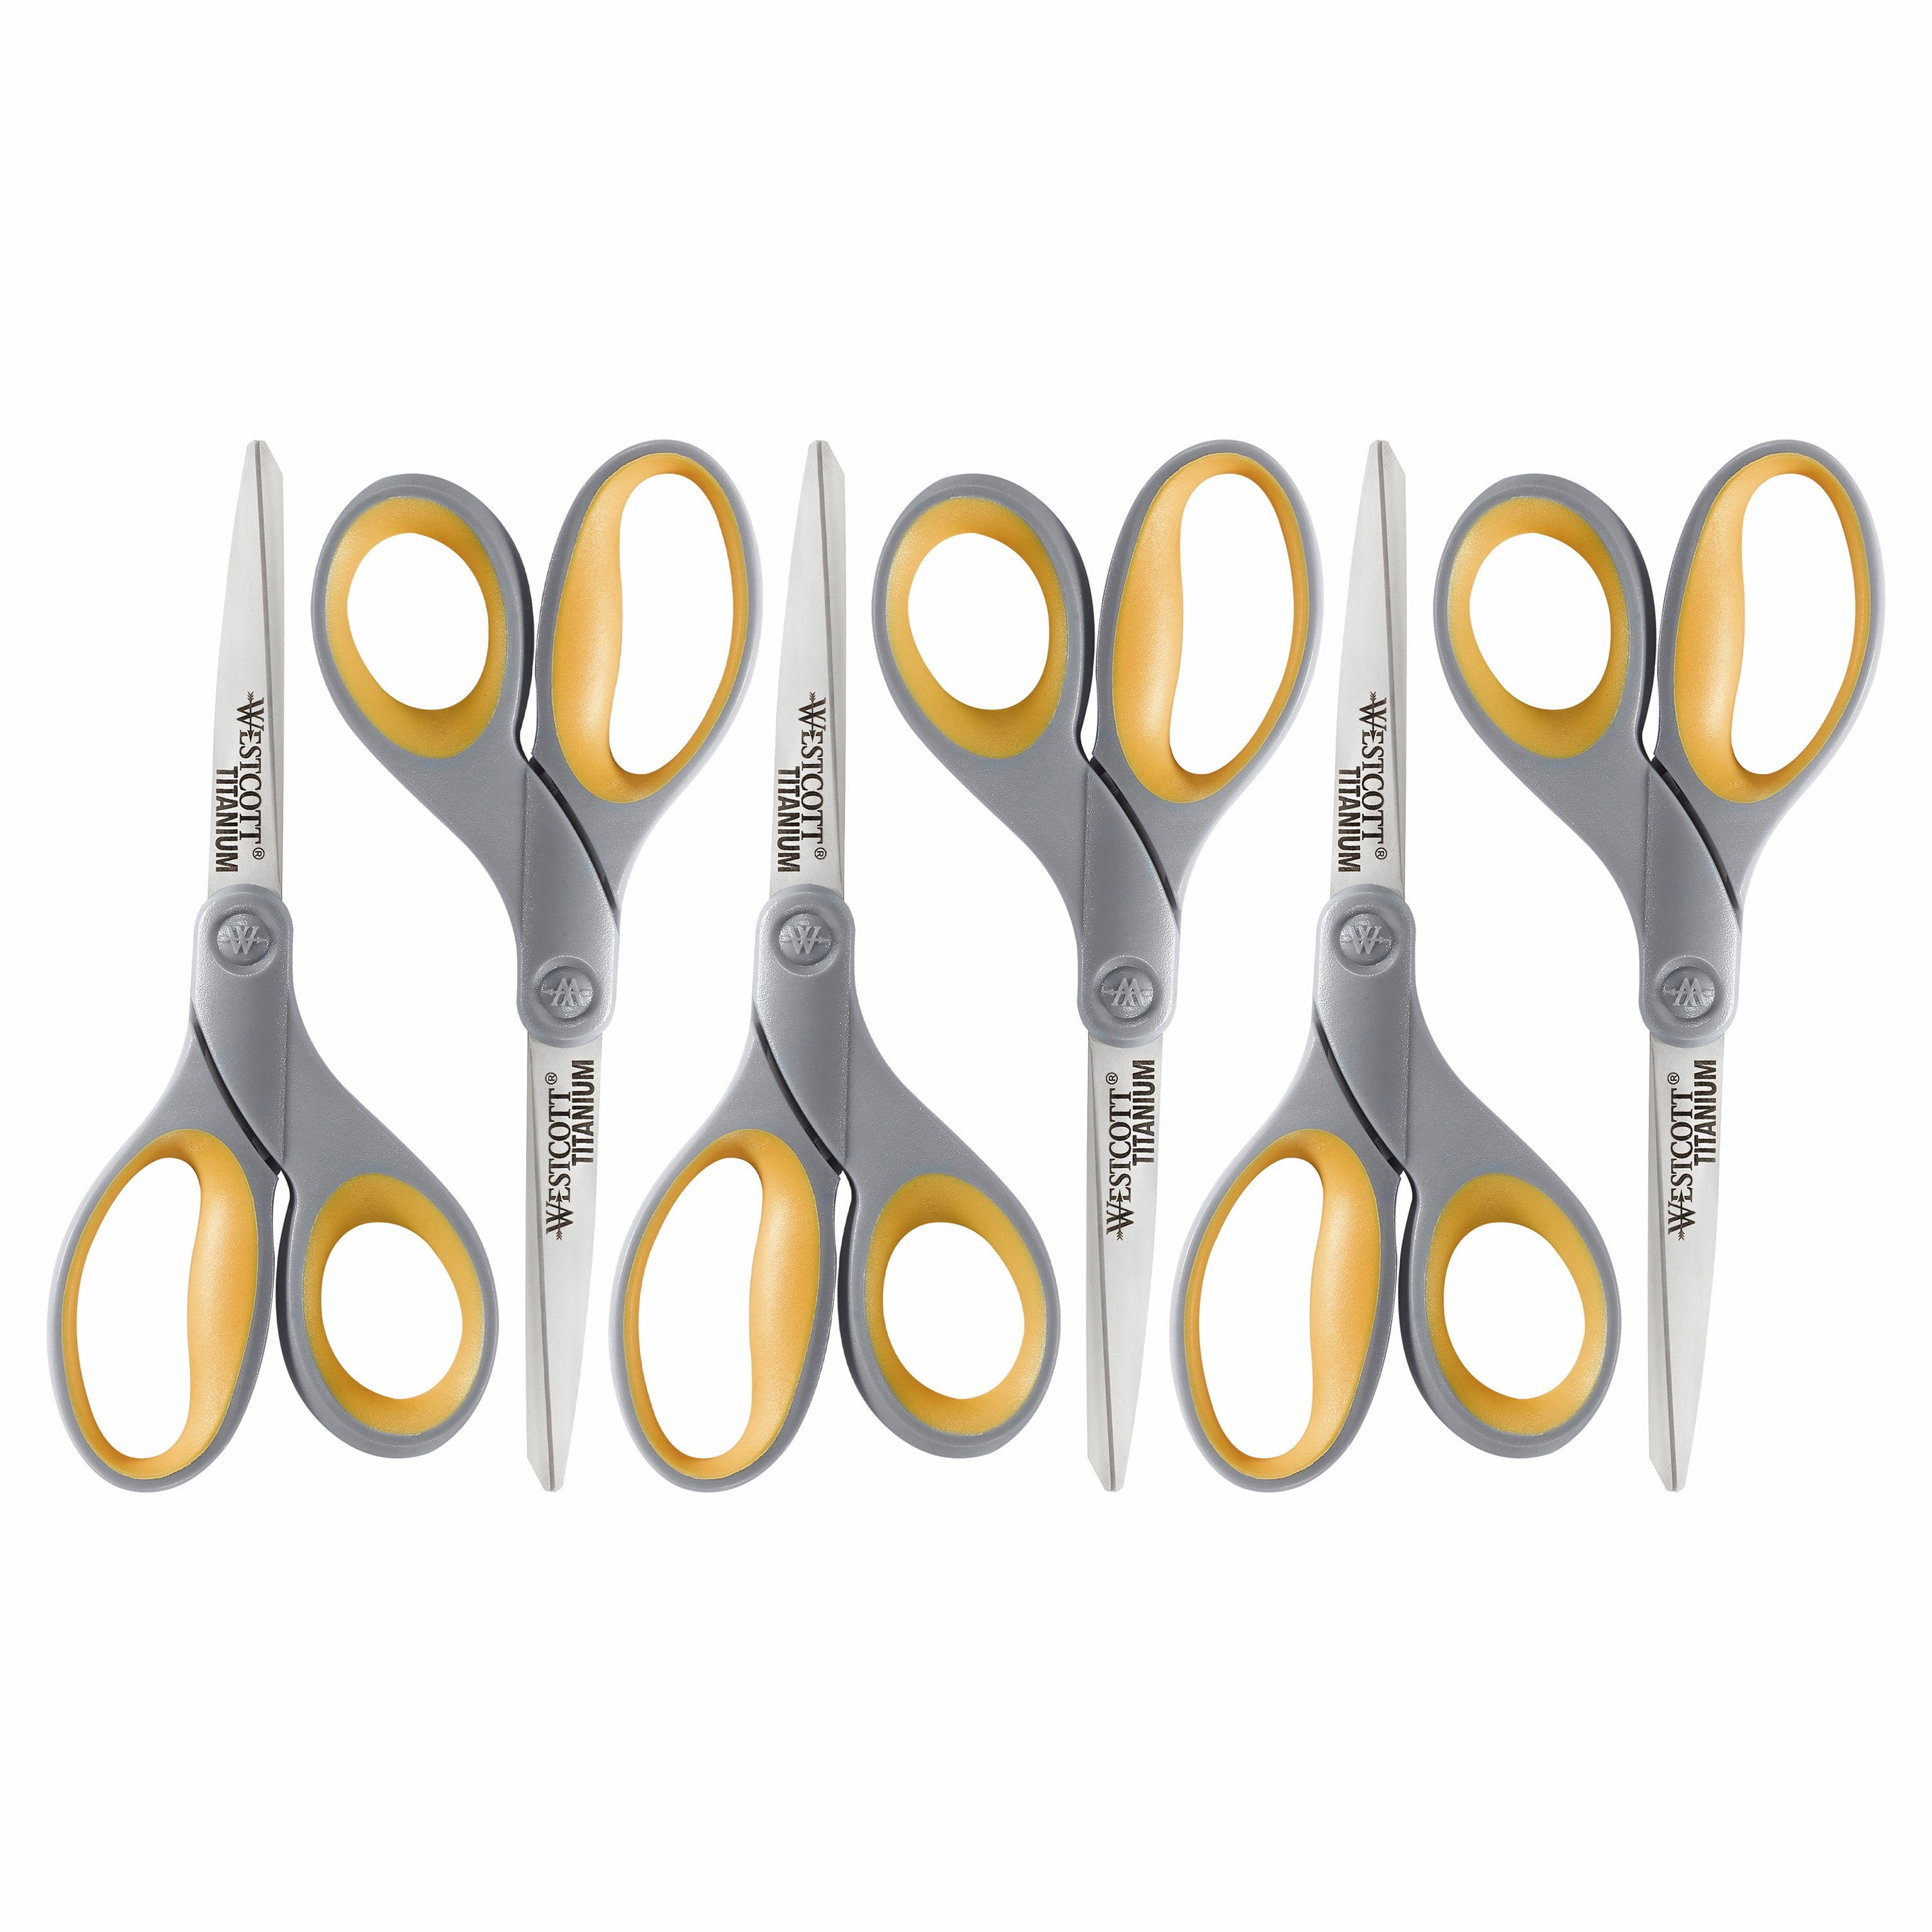 6-Pack Westcott Titanium Scissors, 7", Straight, Gray/Yellow, for Office, $10.85 FS w/ $35 or Walmart+